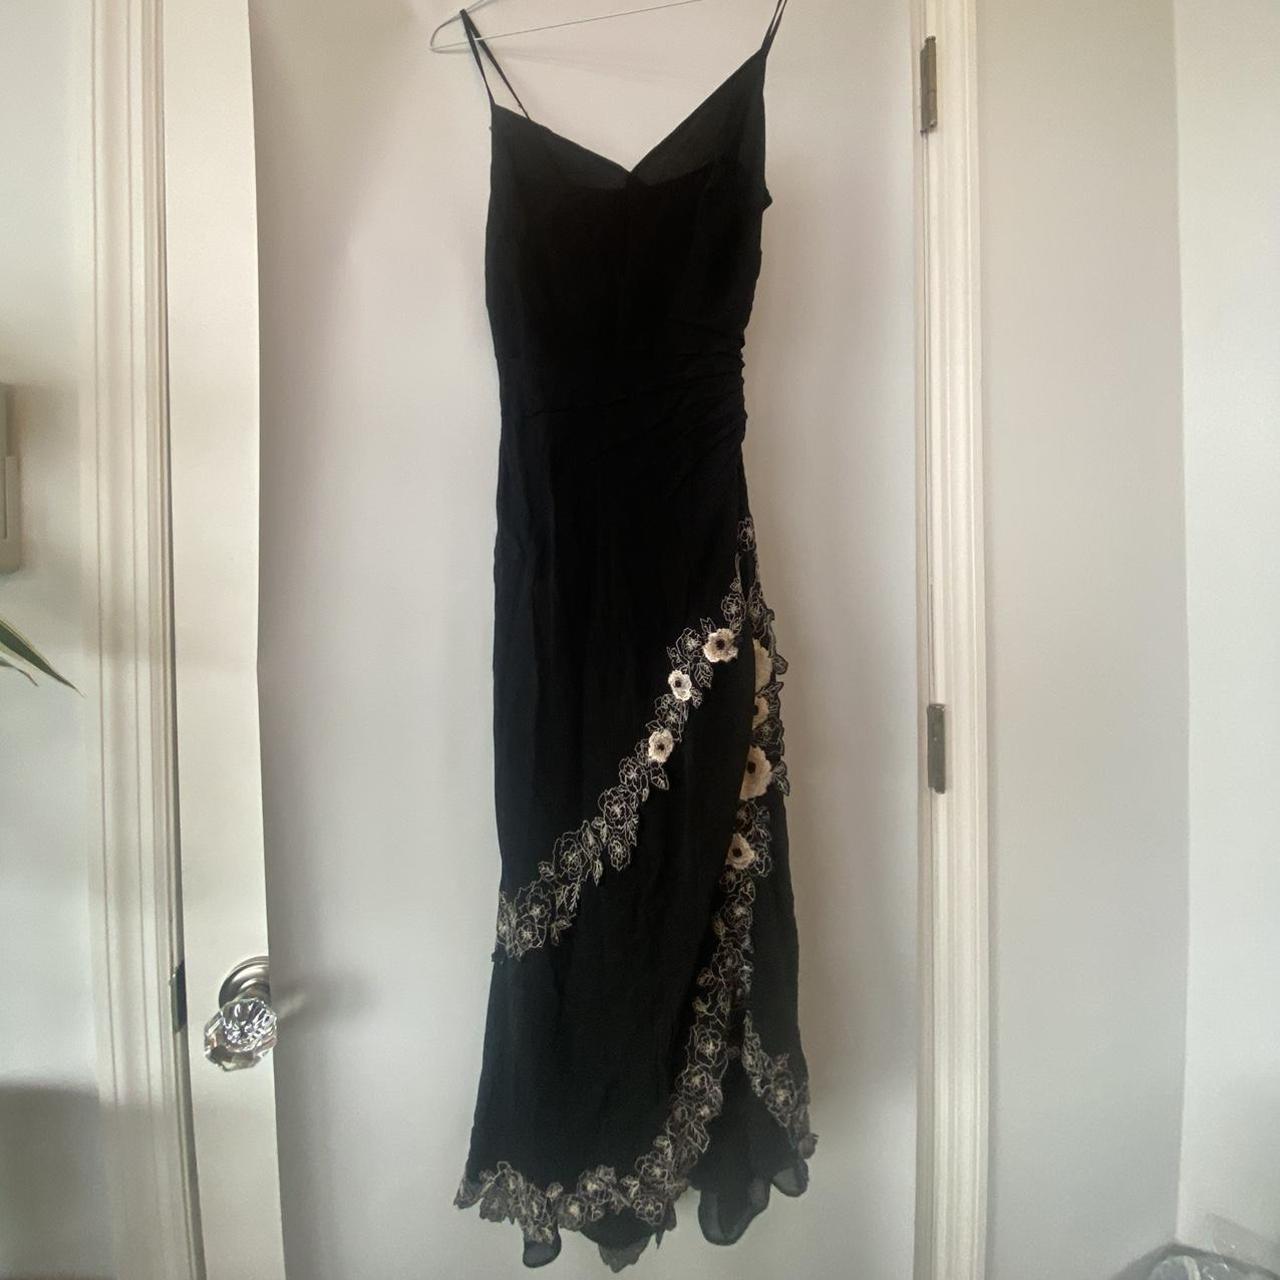 Karen Millen Women's Black and White Dress (4)